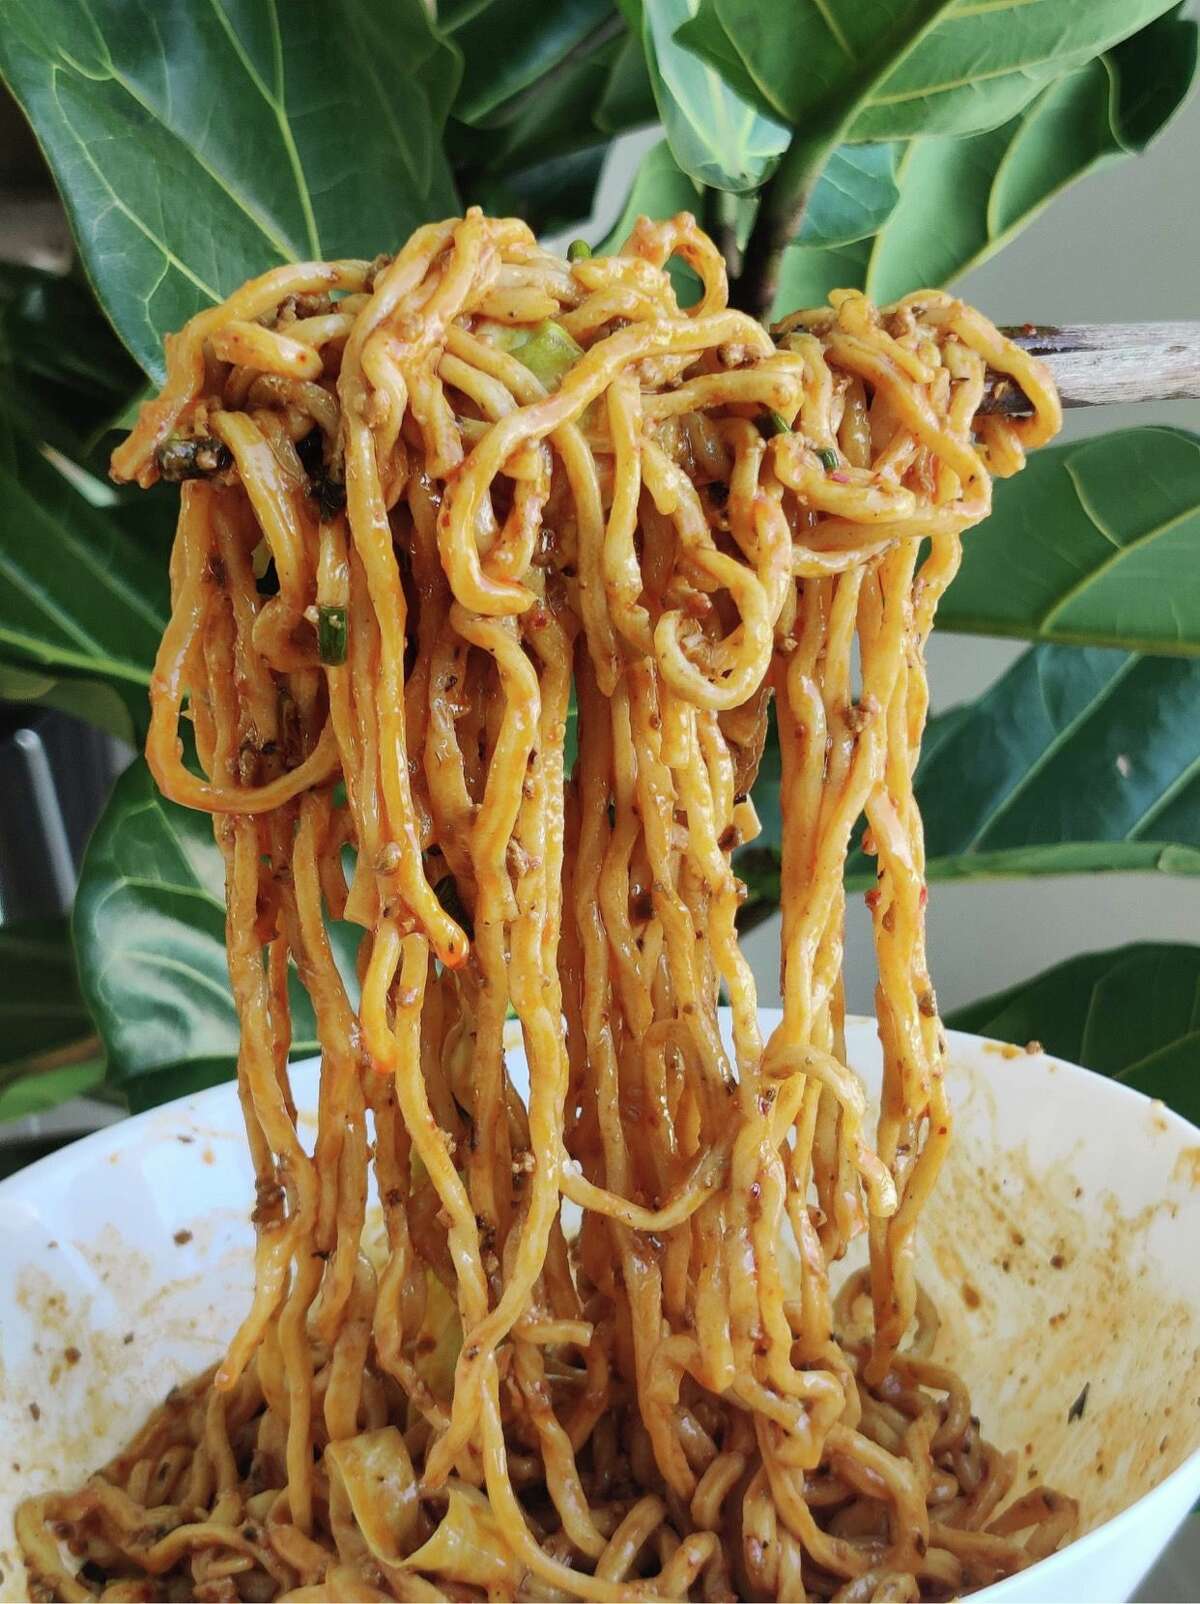 An epic dan dan noodle pull at Mala Sichuan Bistro.